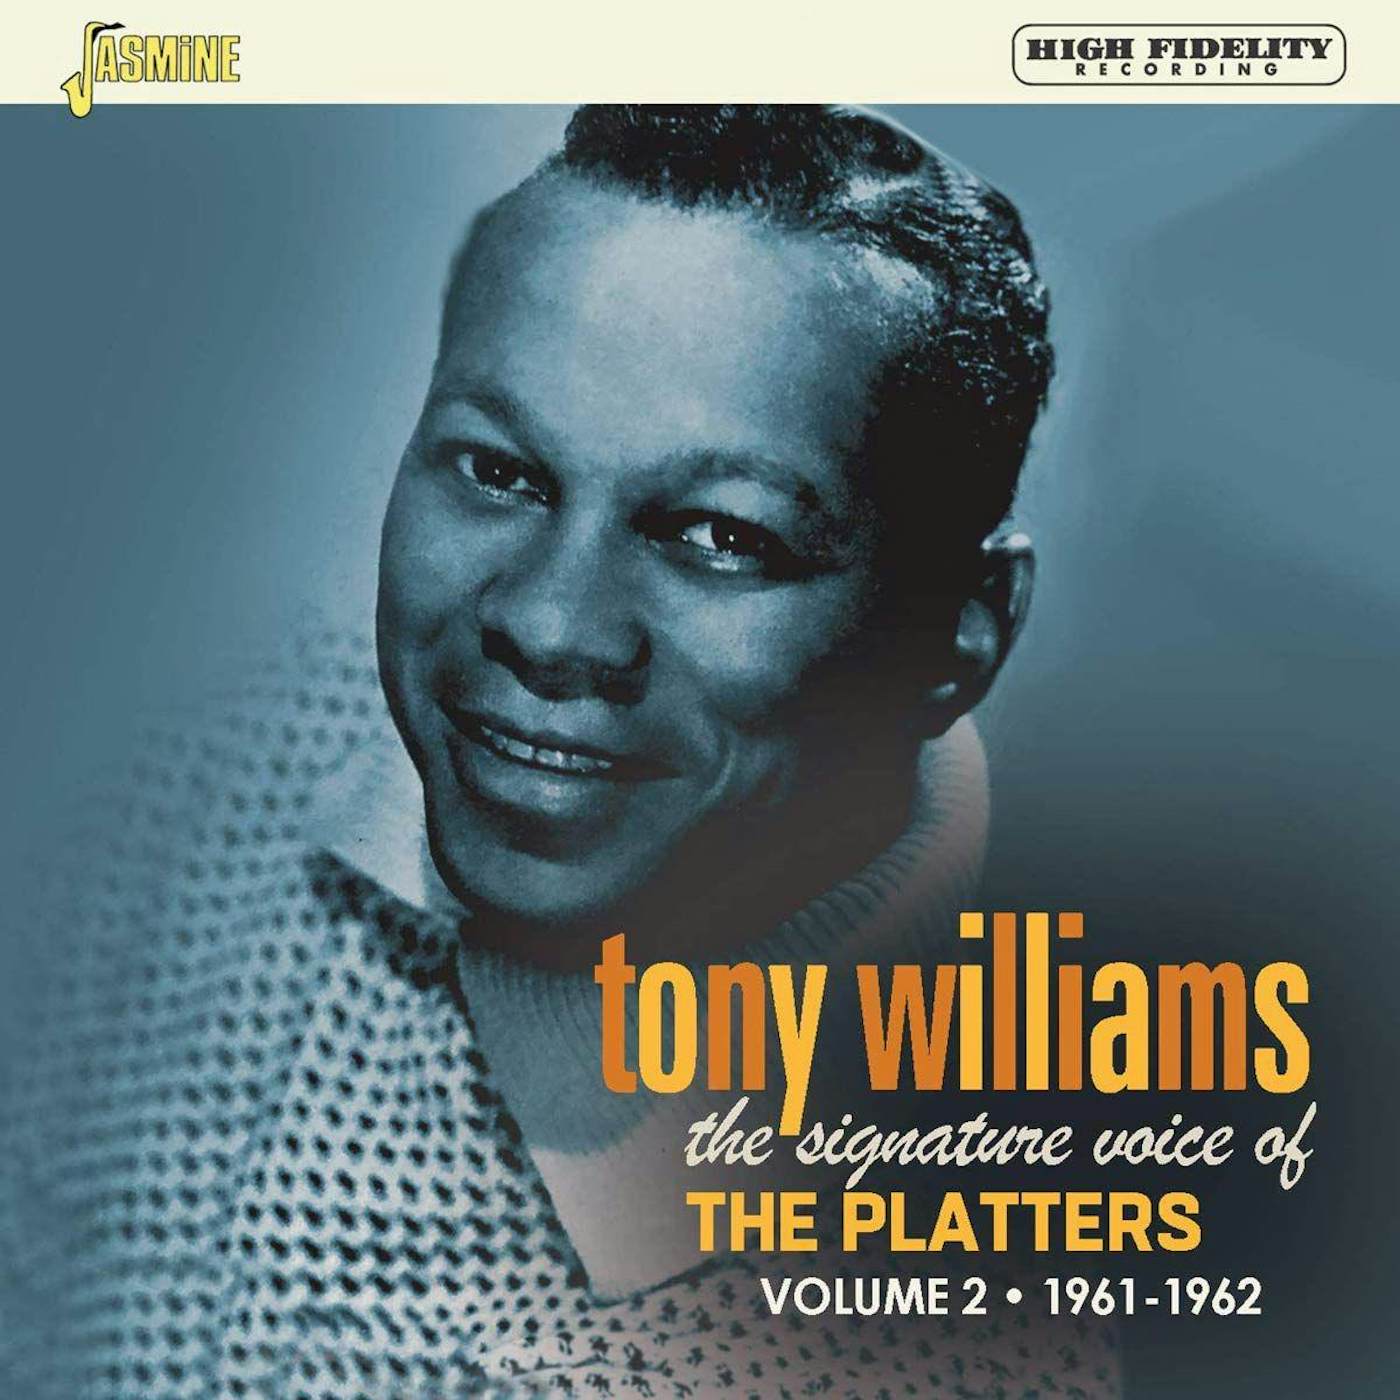 Tony Williams SIGNATURE VOICE OF THE PLATTERS 1961-1962 VOL 2 CD